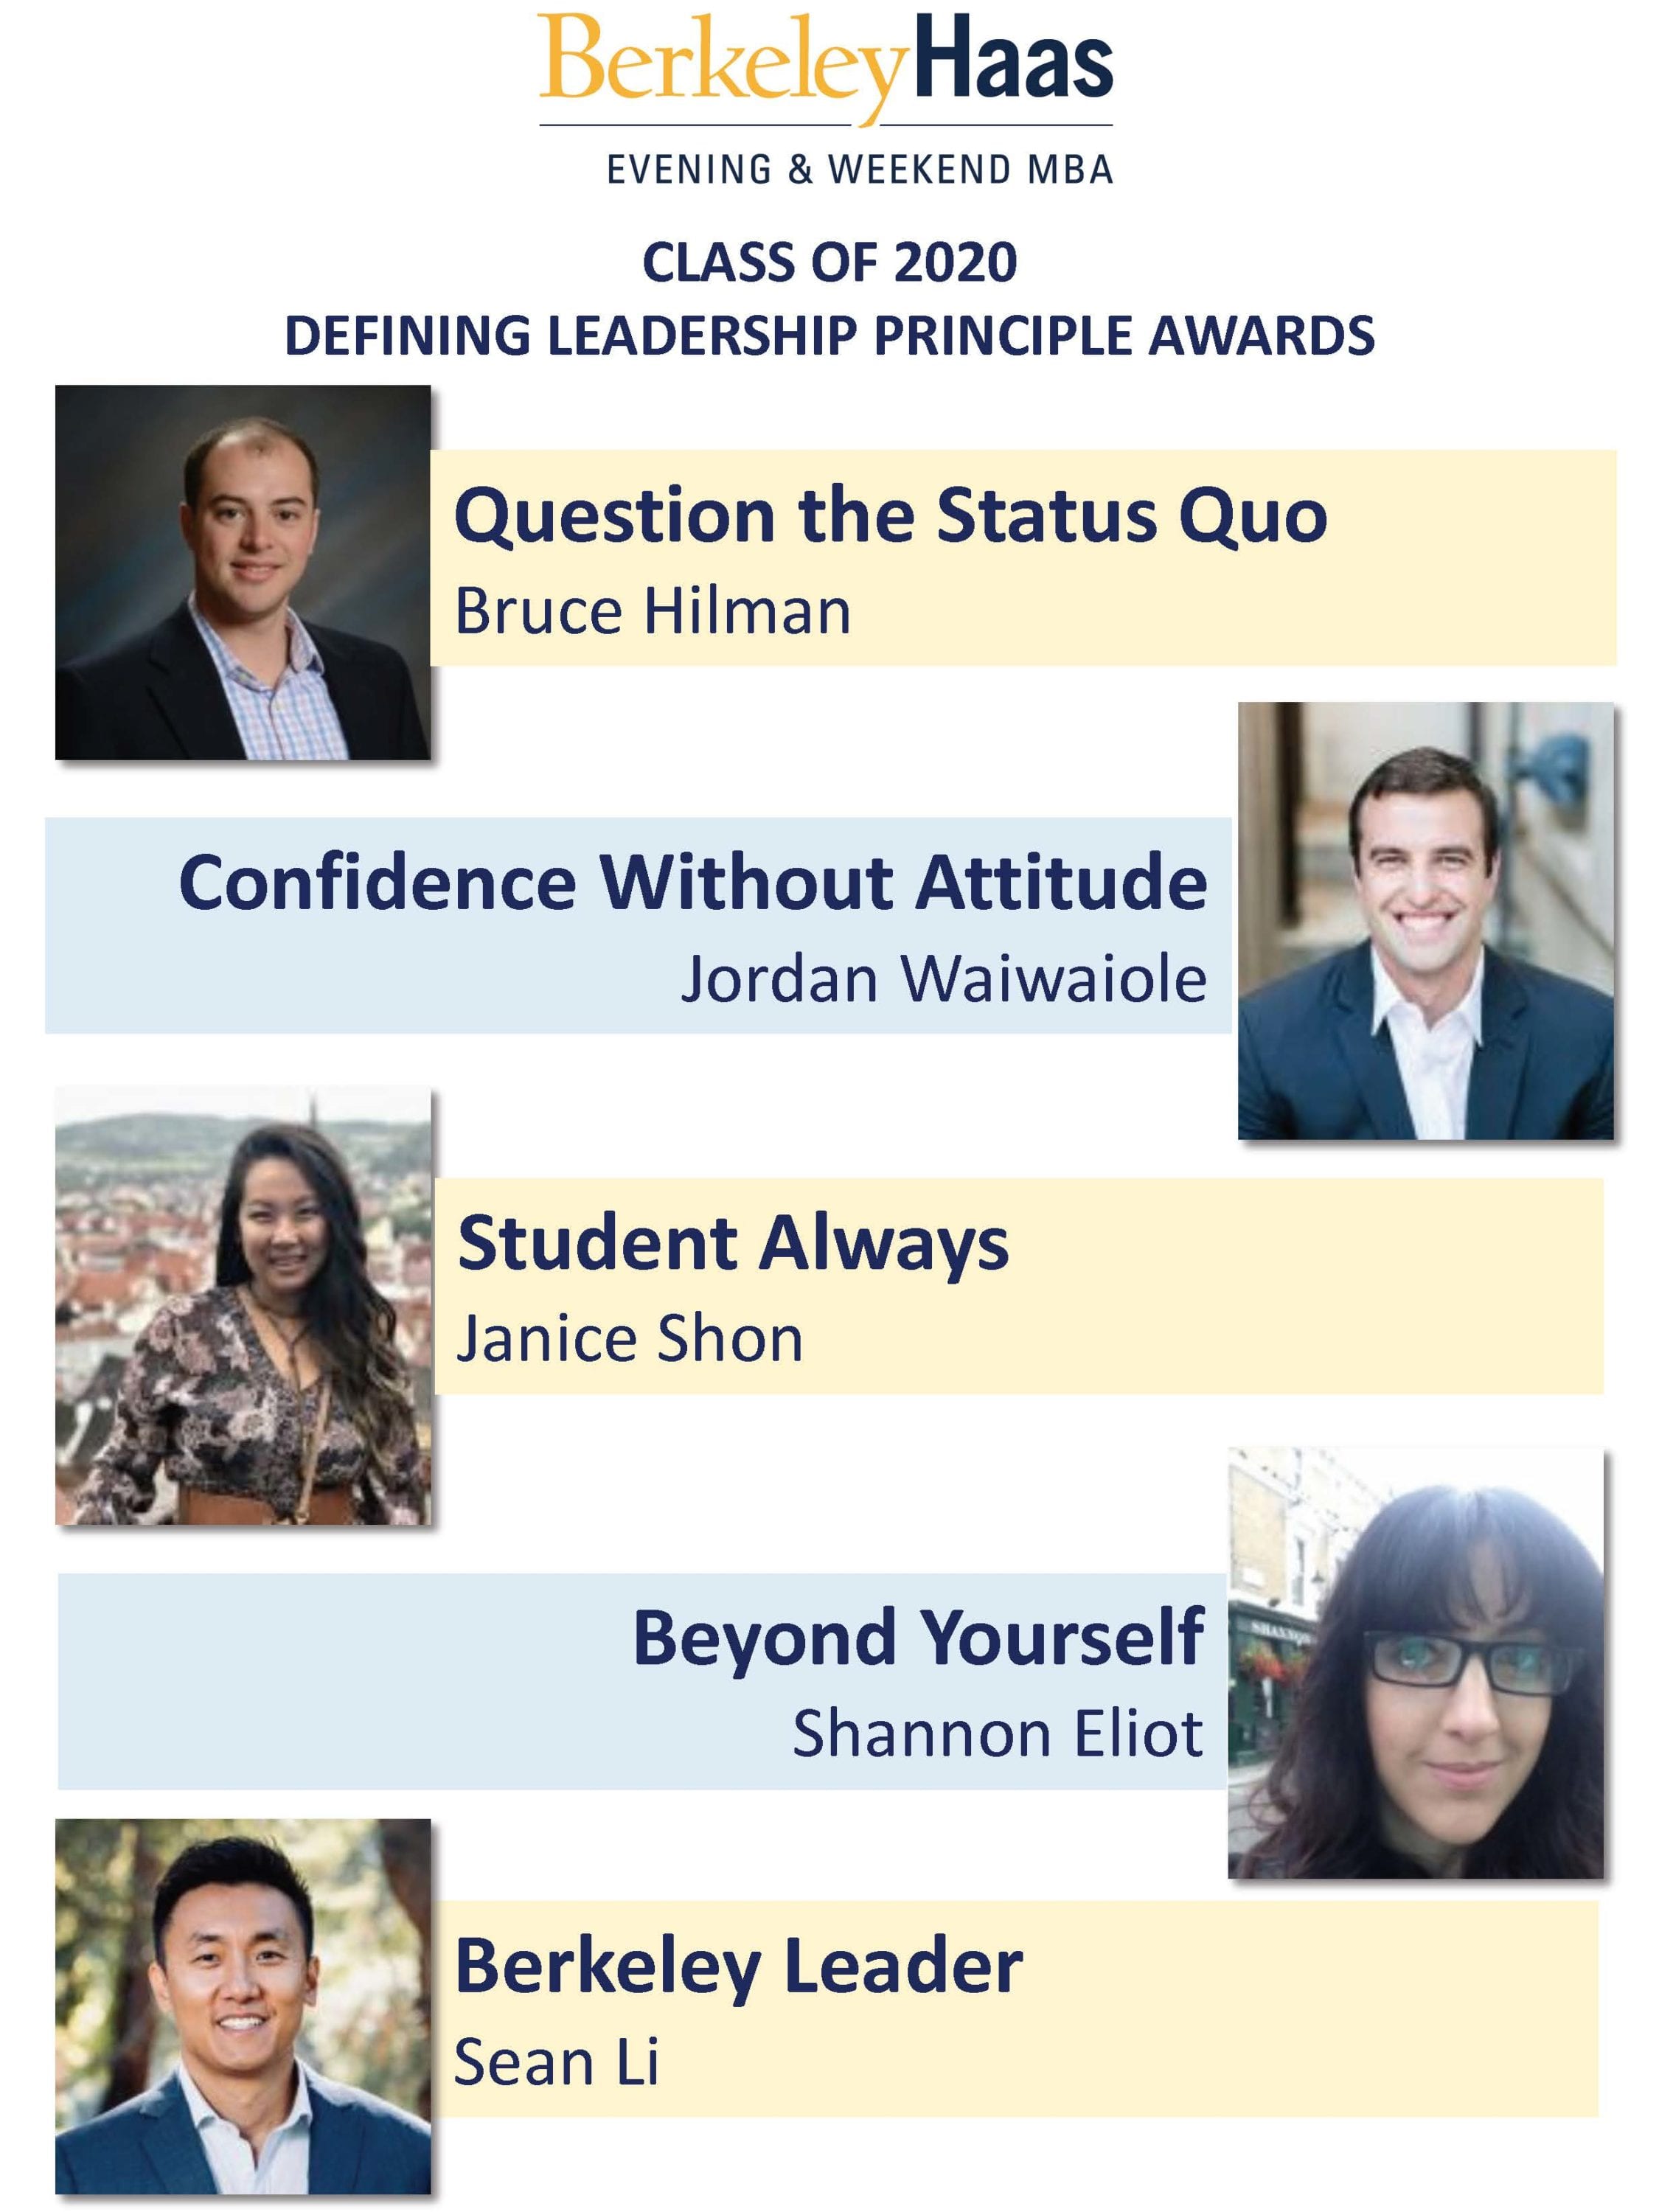 Class of 2020 Defining Leadership Principle Awards: QUESTION THE STATUS QUO: Bruce Hilman; CONFIDENCE WITHOUT ATTITUDE: Jordan Waiwaiole; STUDENT ALWAYS: Janice Shon; BEYOND YOURSELF: Shannon Eliot; BERKELEY LEADER: Sean Li